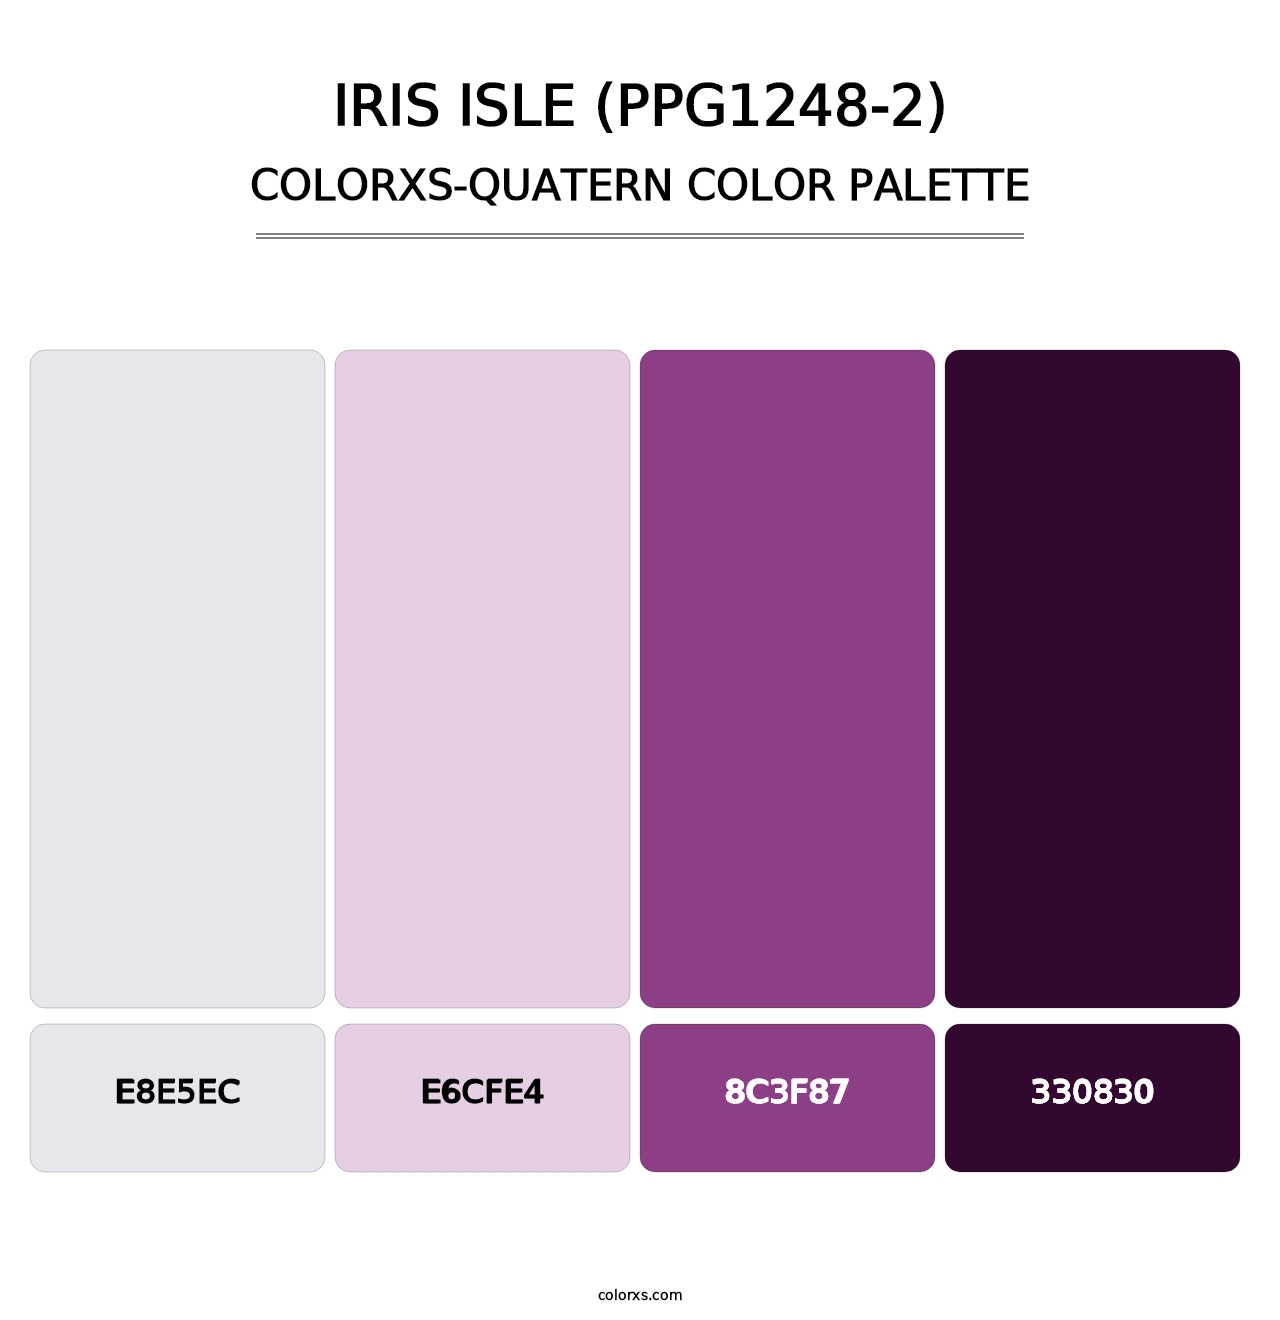 Iris Isle (PPG1248-2) - Colorxs Quatern Palette